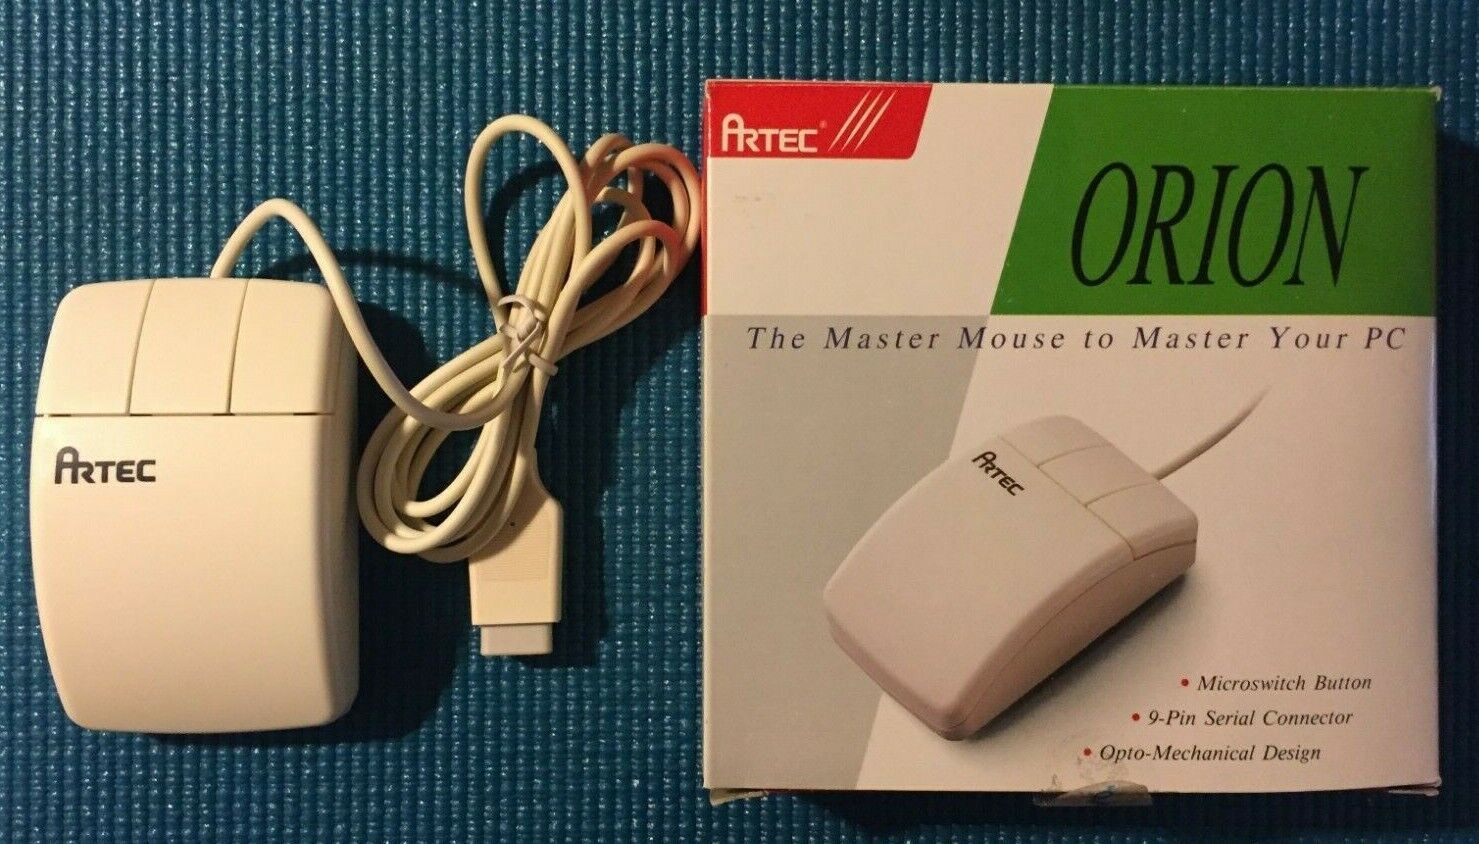 Vintage Three Button Computer Mouse Orion Artec w/ 3.5" Disk